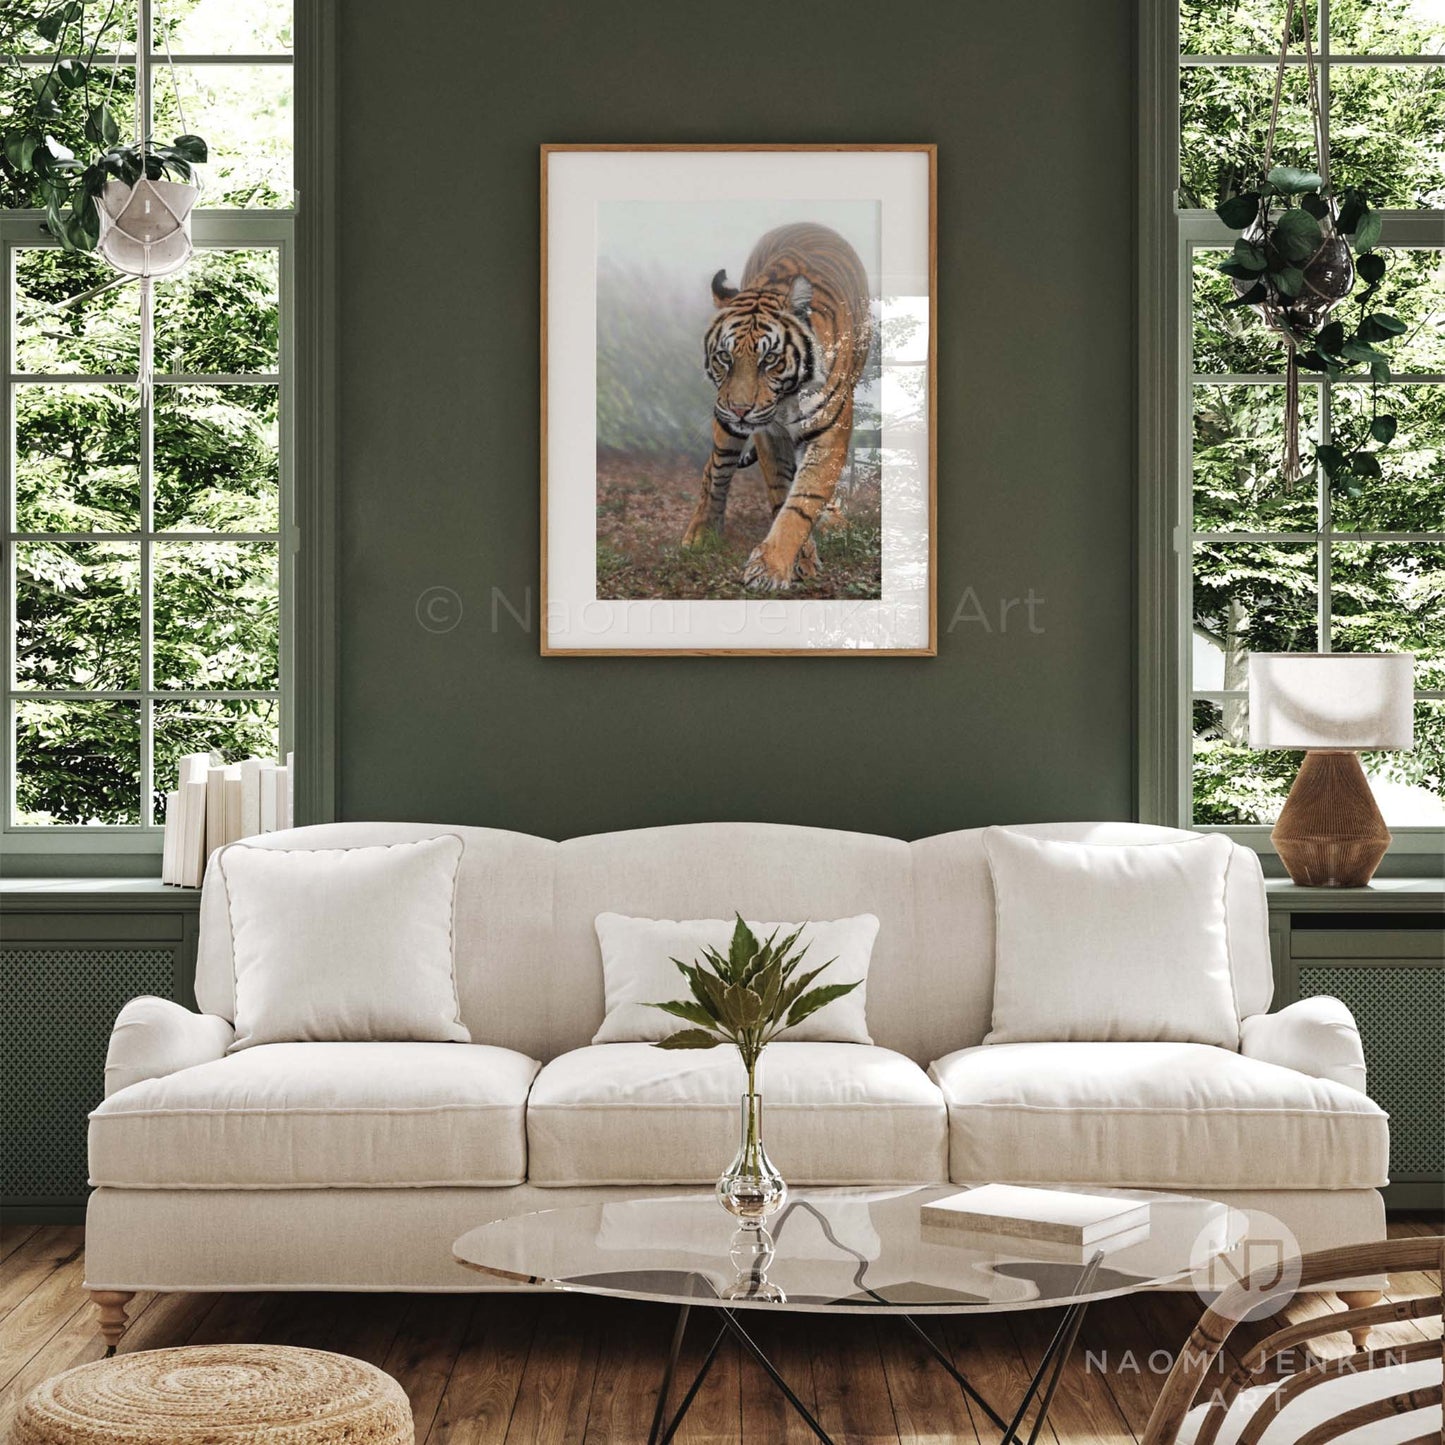 Framed tiger painting "Stealth" by wildlife artist Naomi Jenkin Art